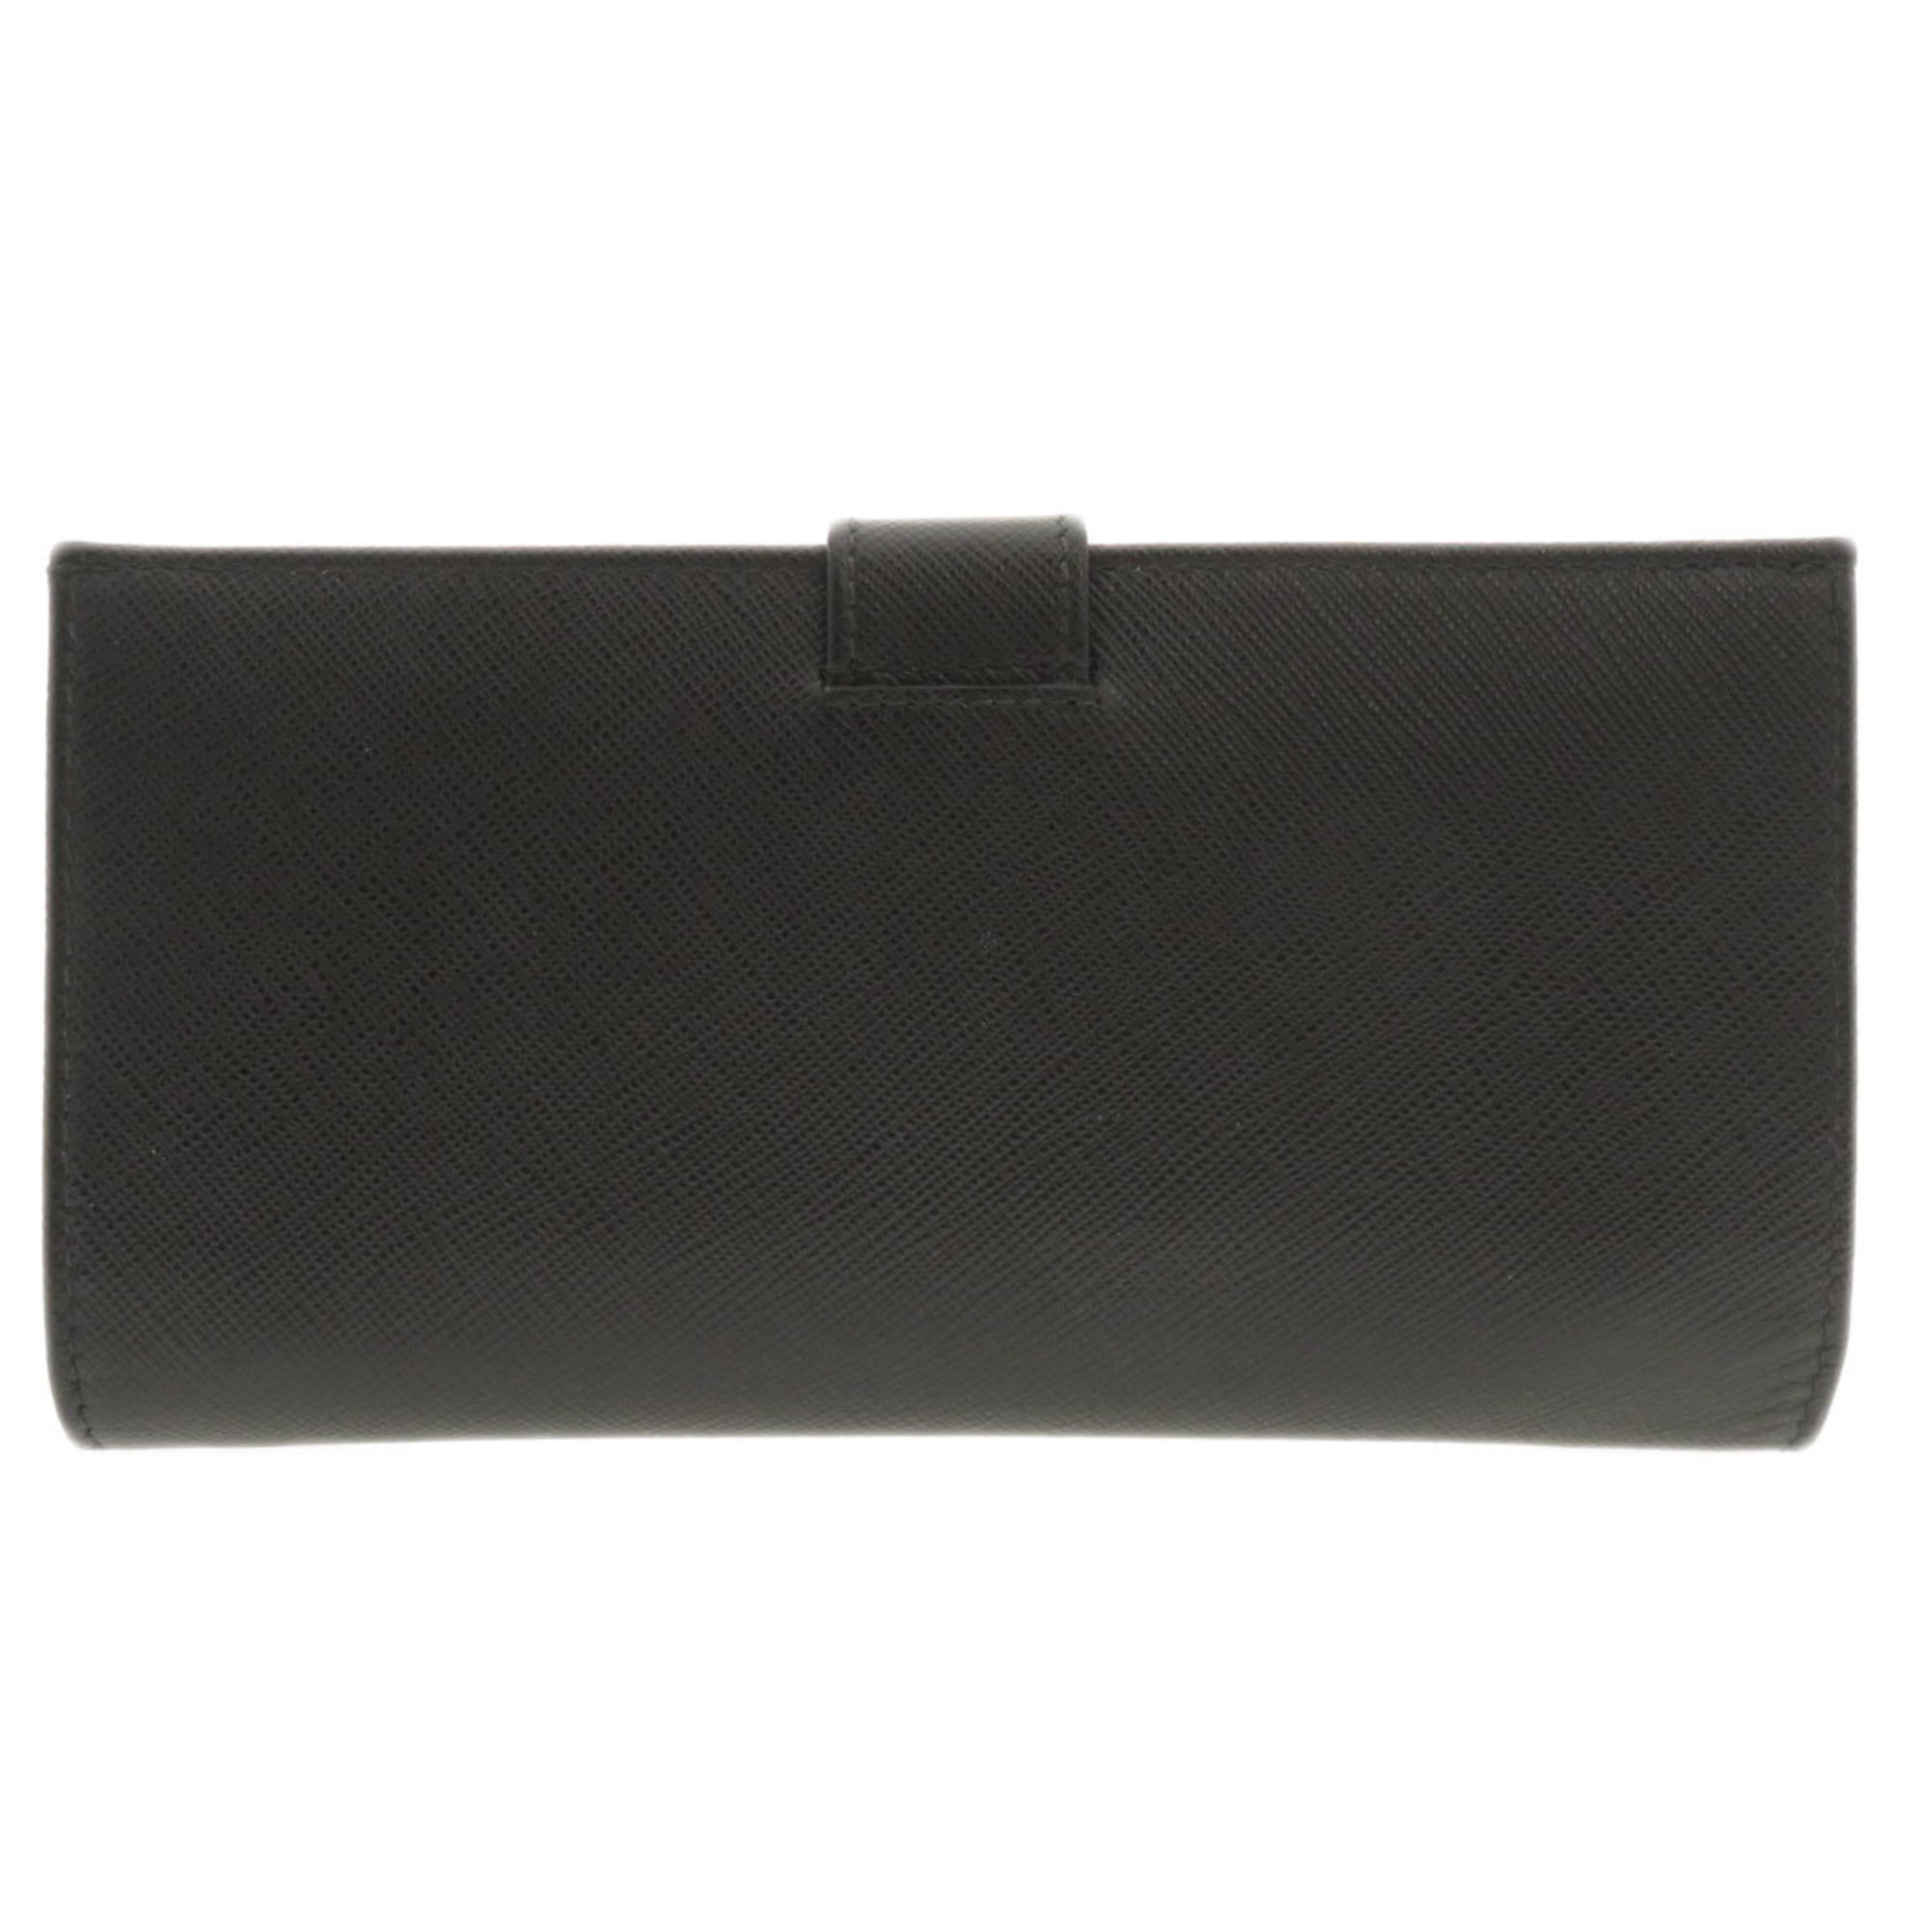 PRADA 1MV025 motif long wallet leather women's